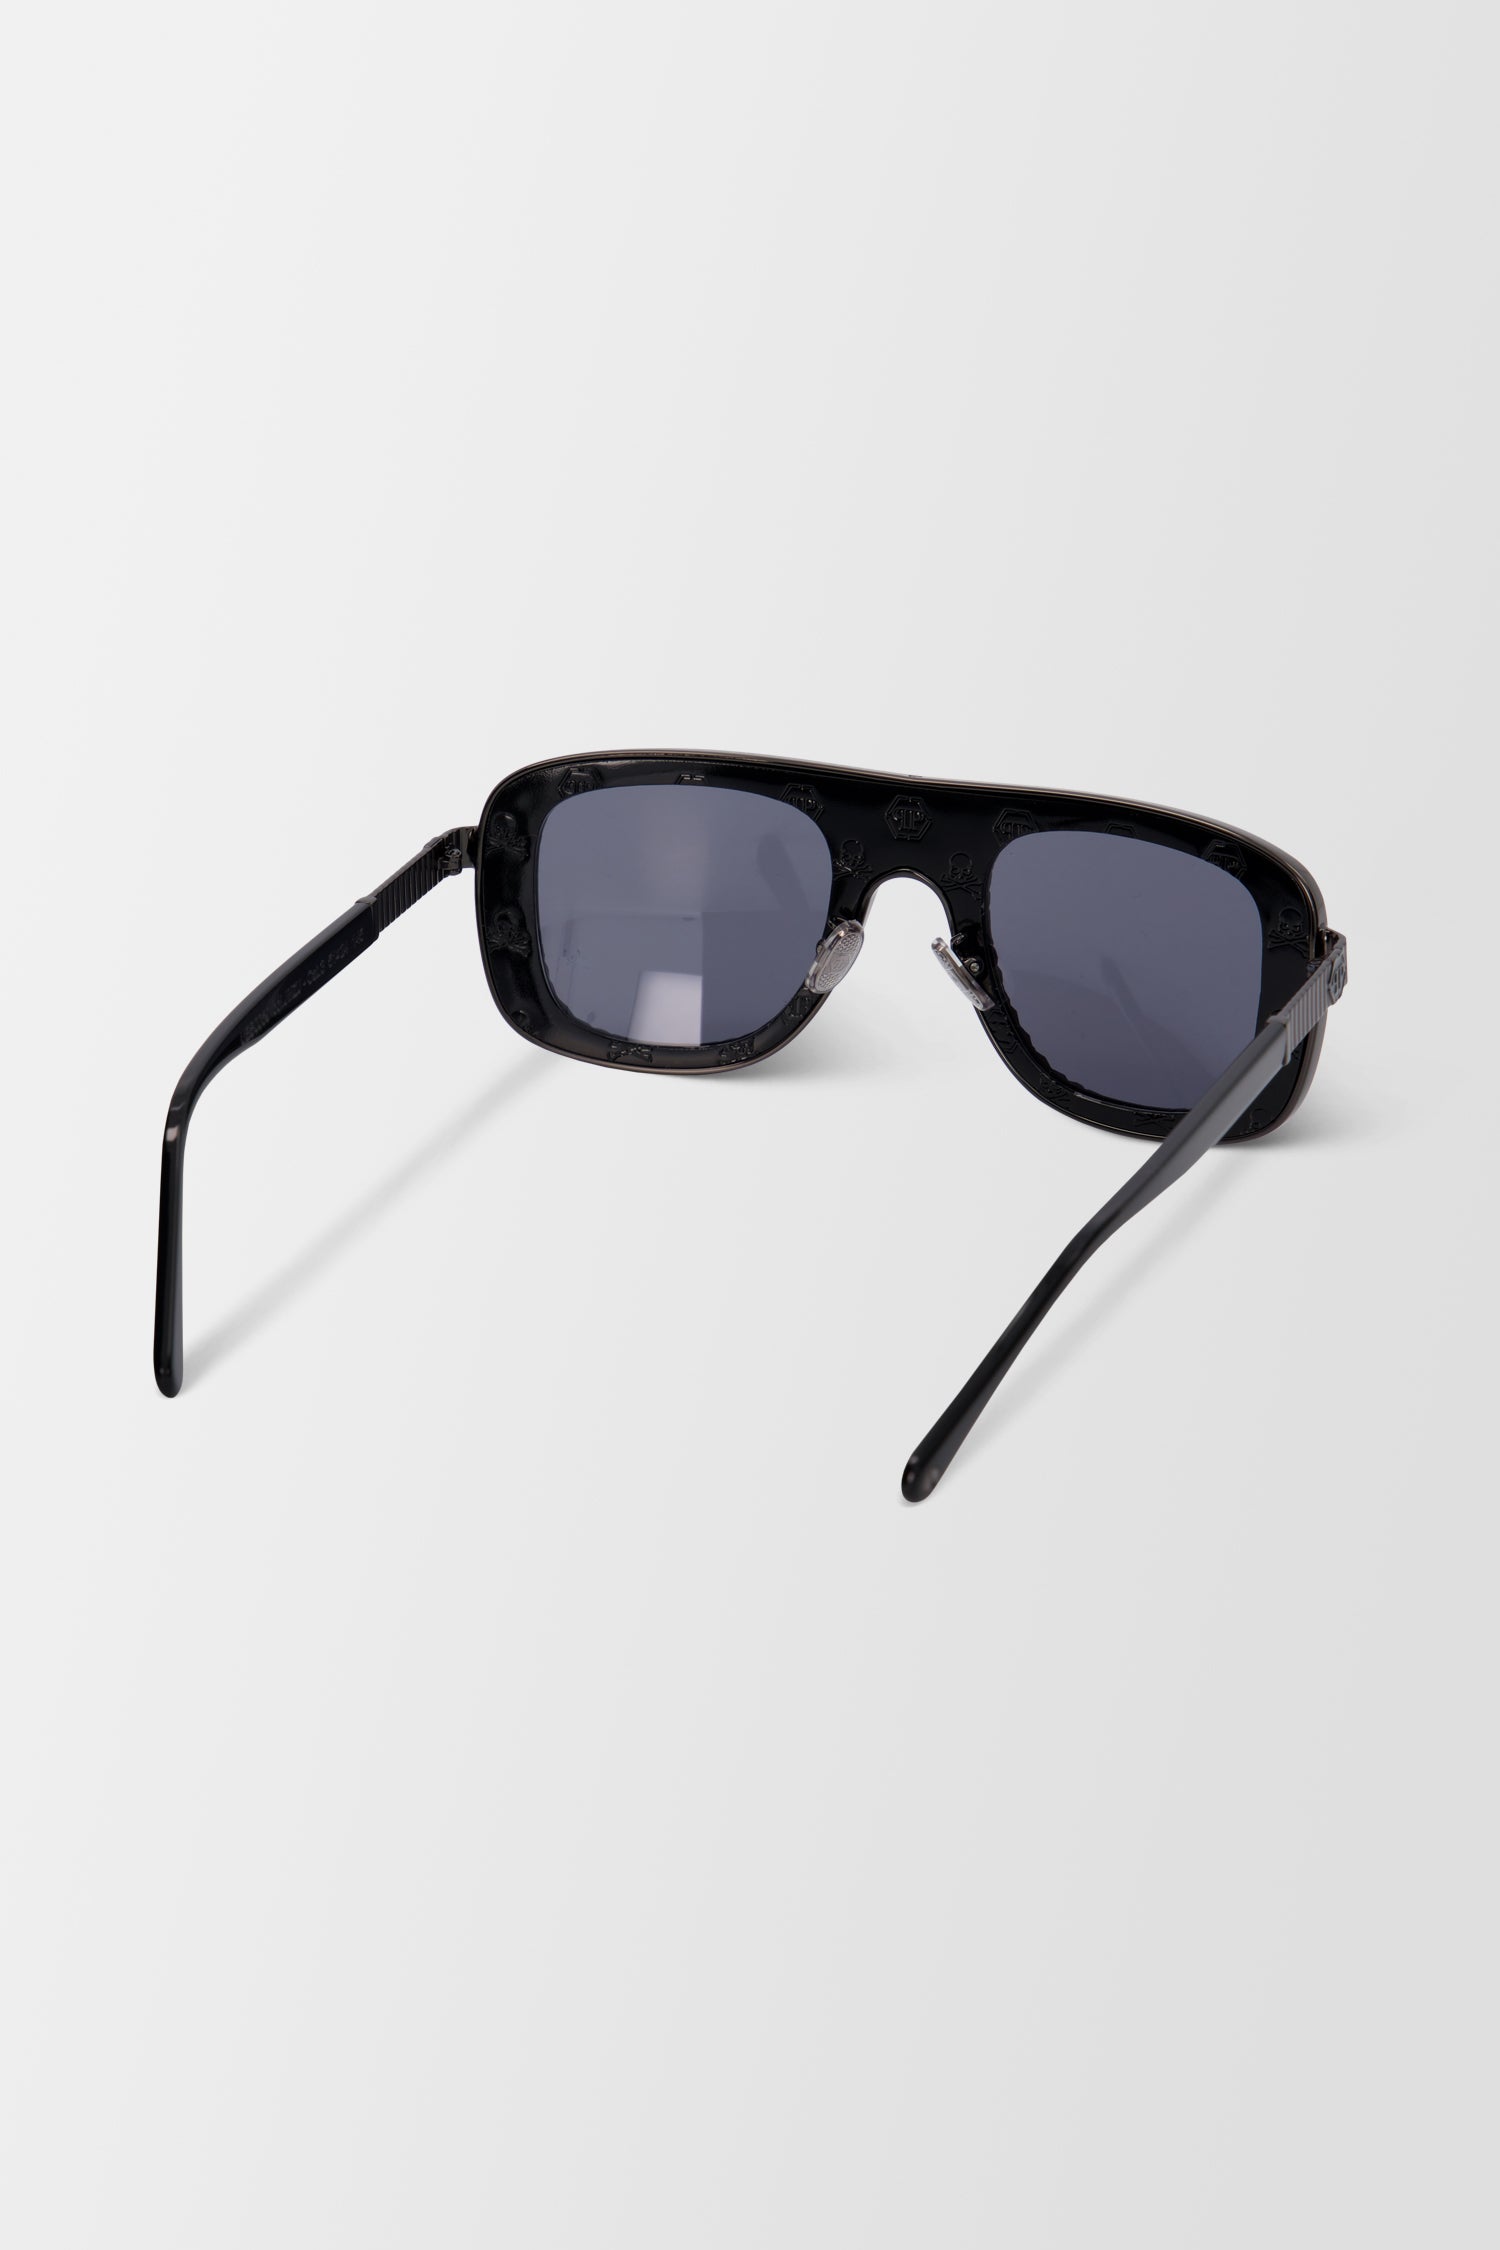 Philipp Plein Nickel/Black Sunglasses